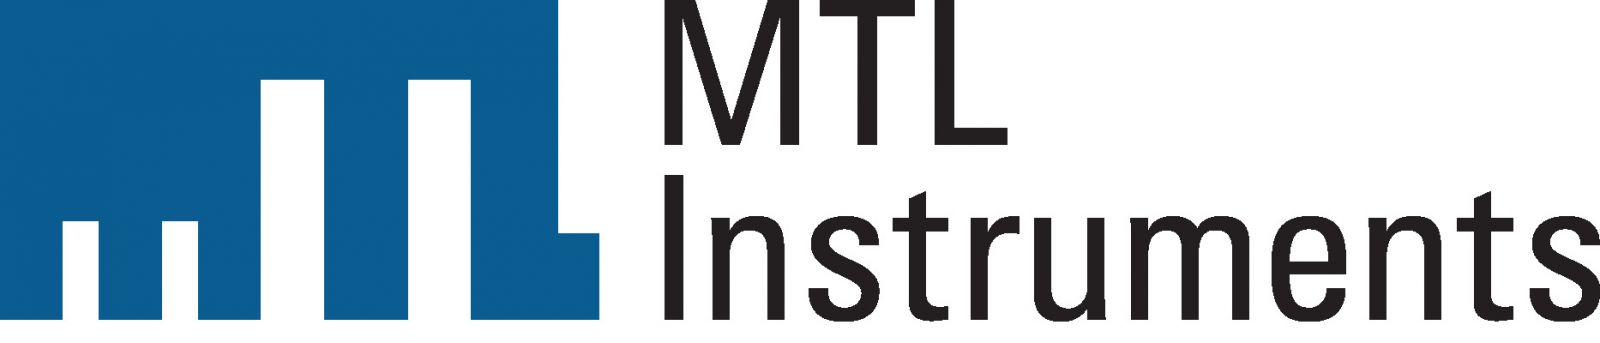 MTL Instruments Logo